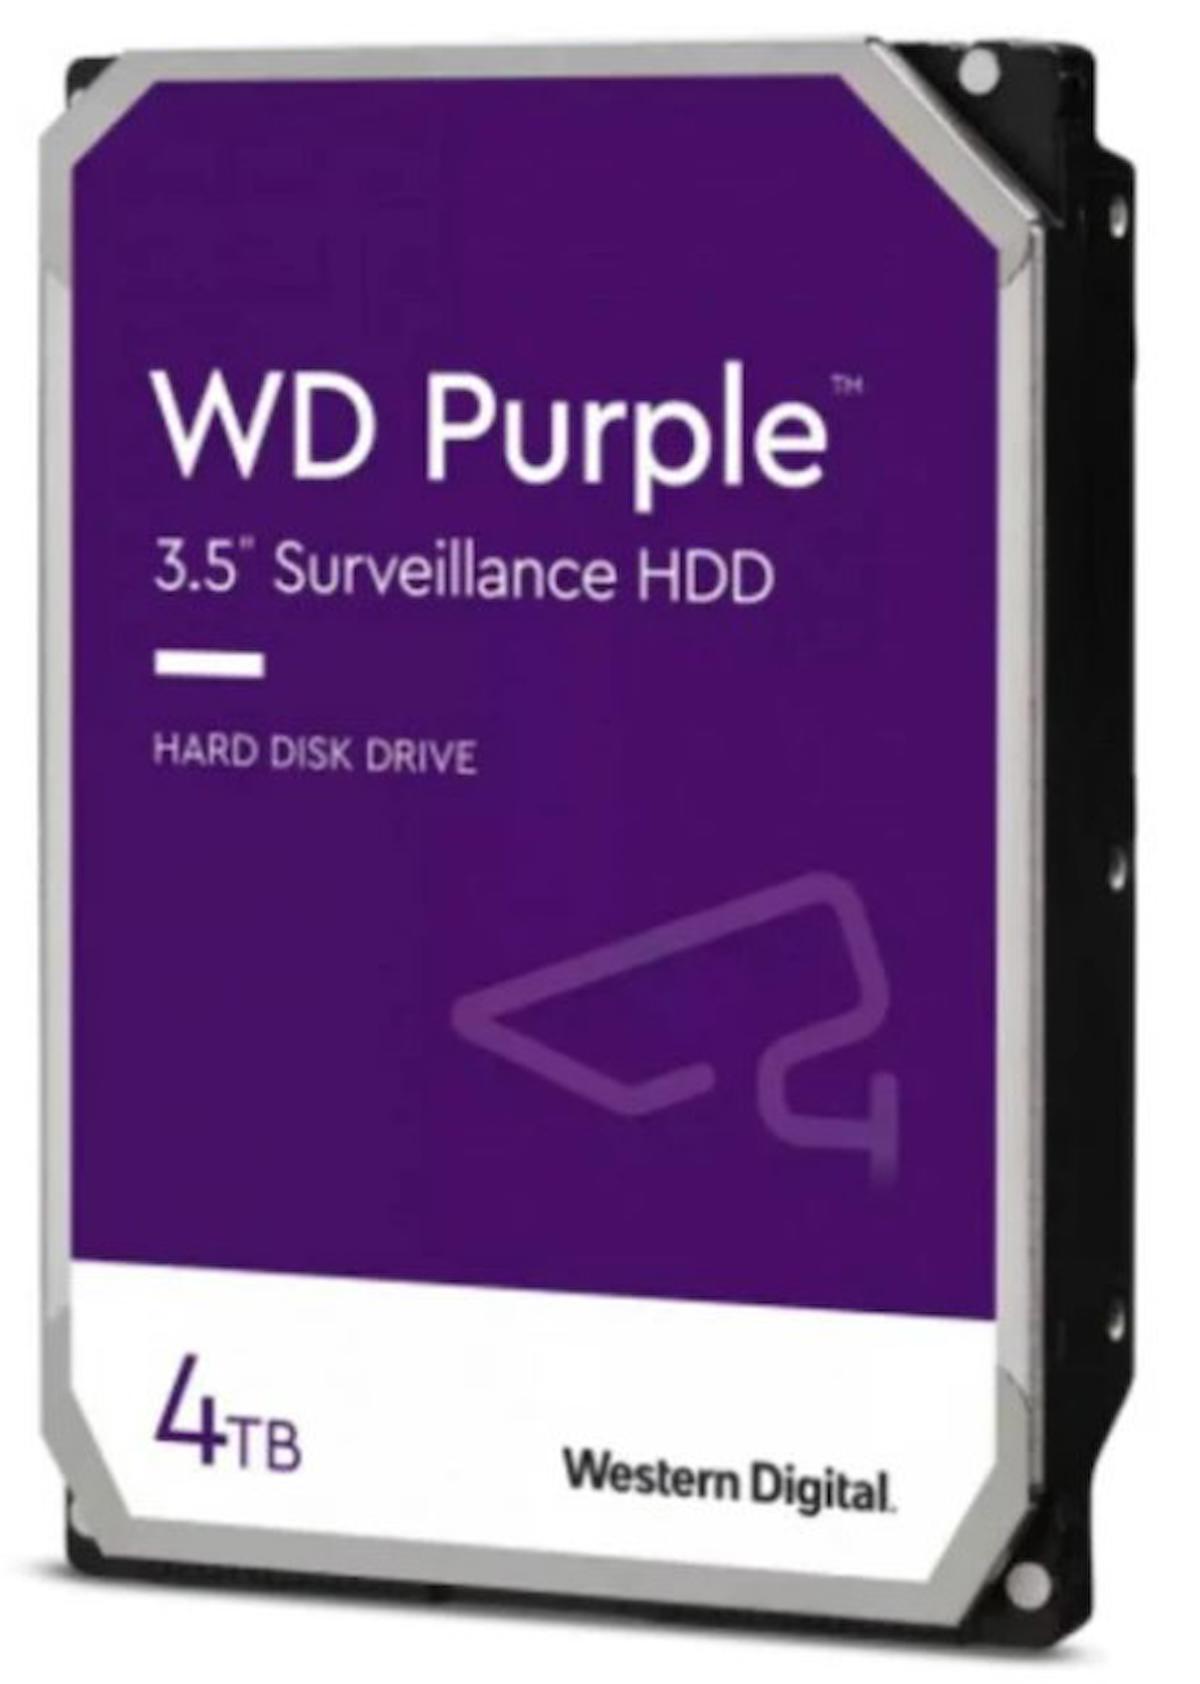 Western Digital WD Purple WD42PURZ 4 TB 3.5 inç 5400 RPM 256 MB SATA 3.0 Güvenlik Kamerası Harddisk